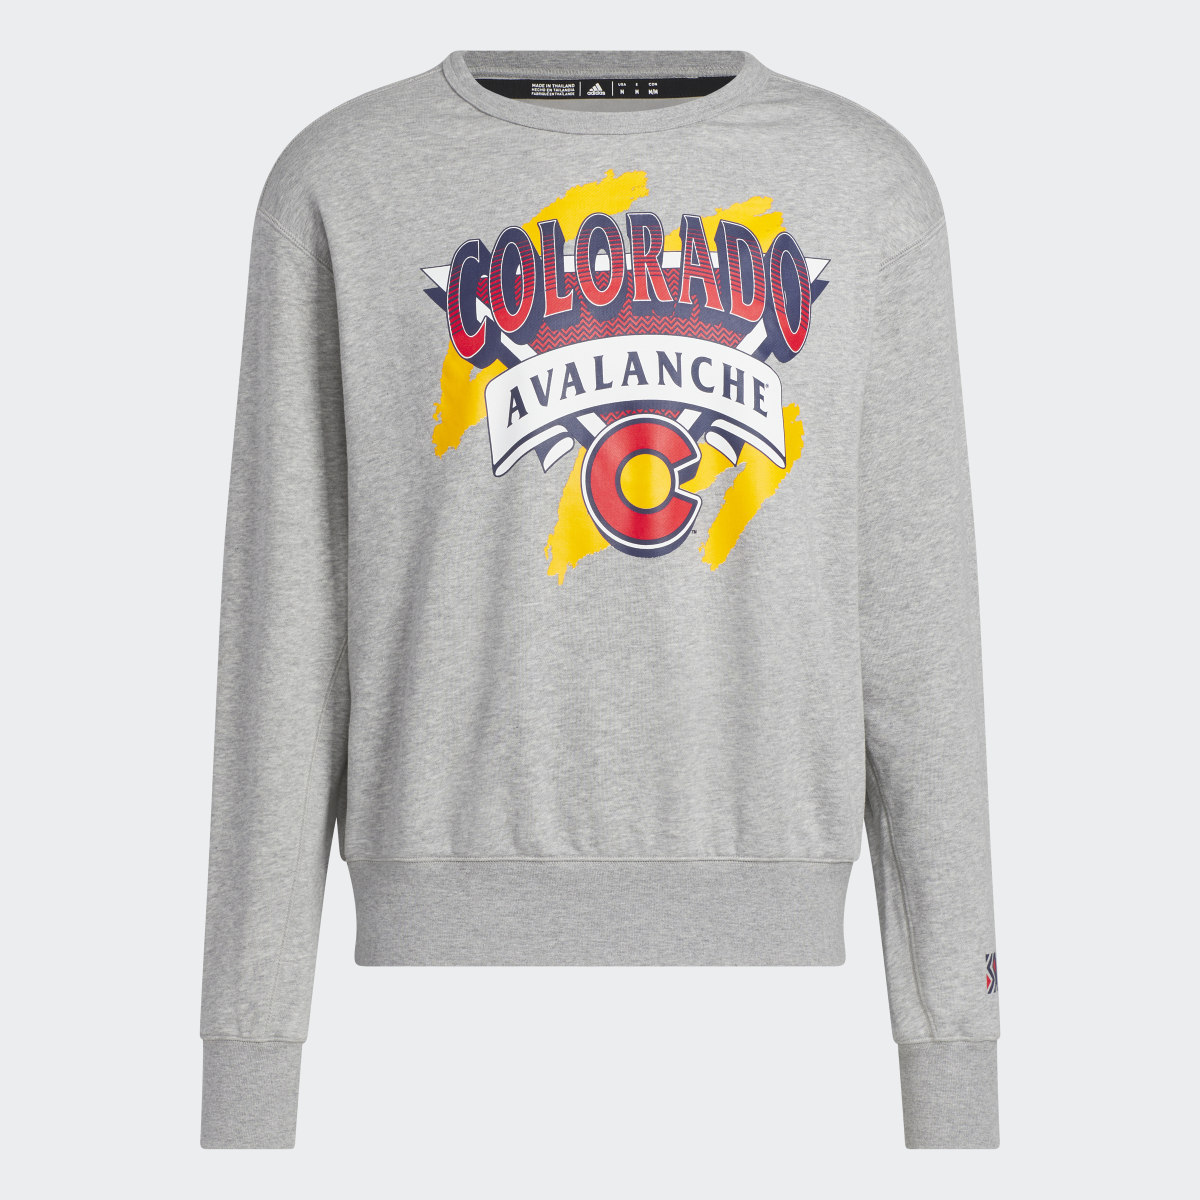 Adidas Avalanche Vintage Crew Sweatshirt. 5